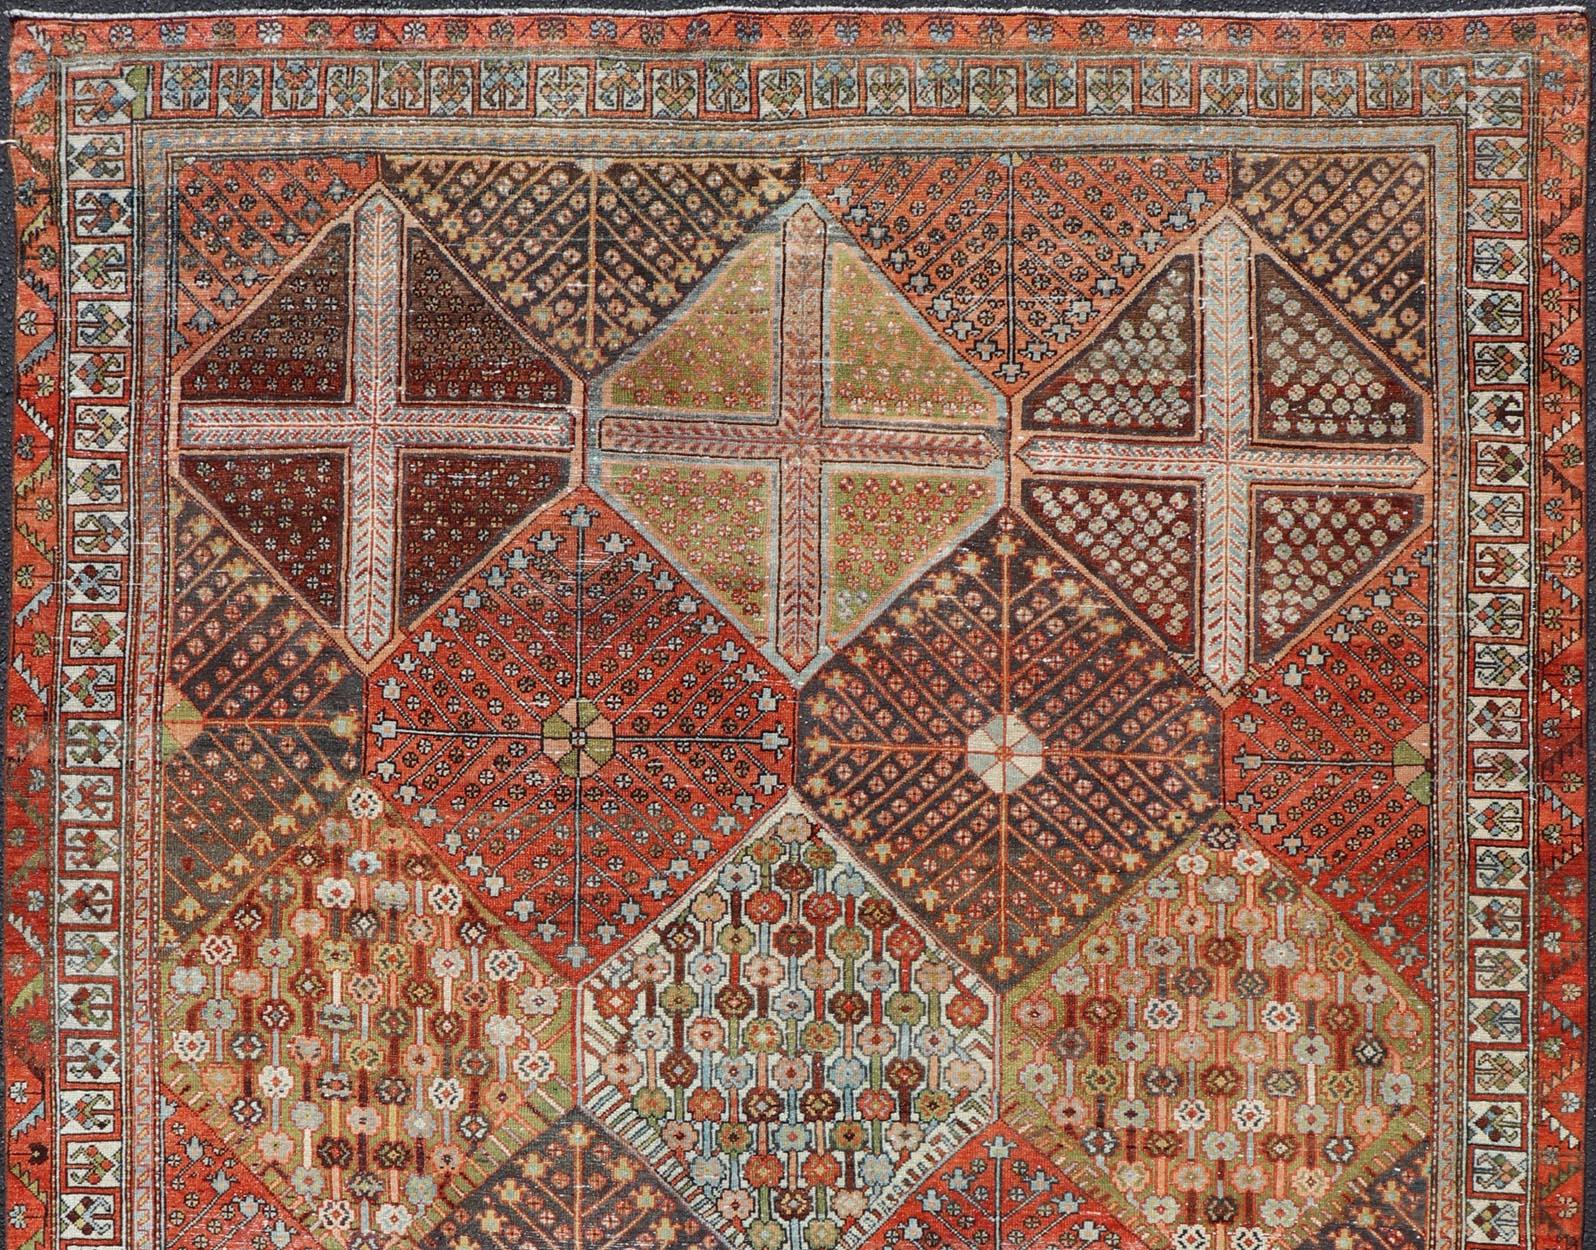 Antique Persian All-Over Large Diamond Design Bakhtiari Rug in Multi Colors 1